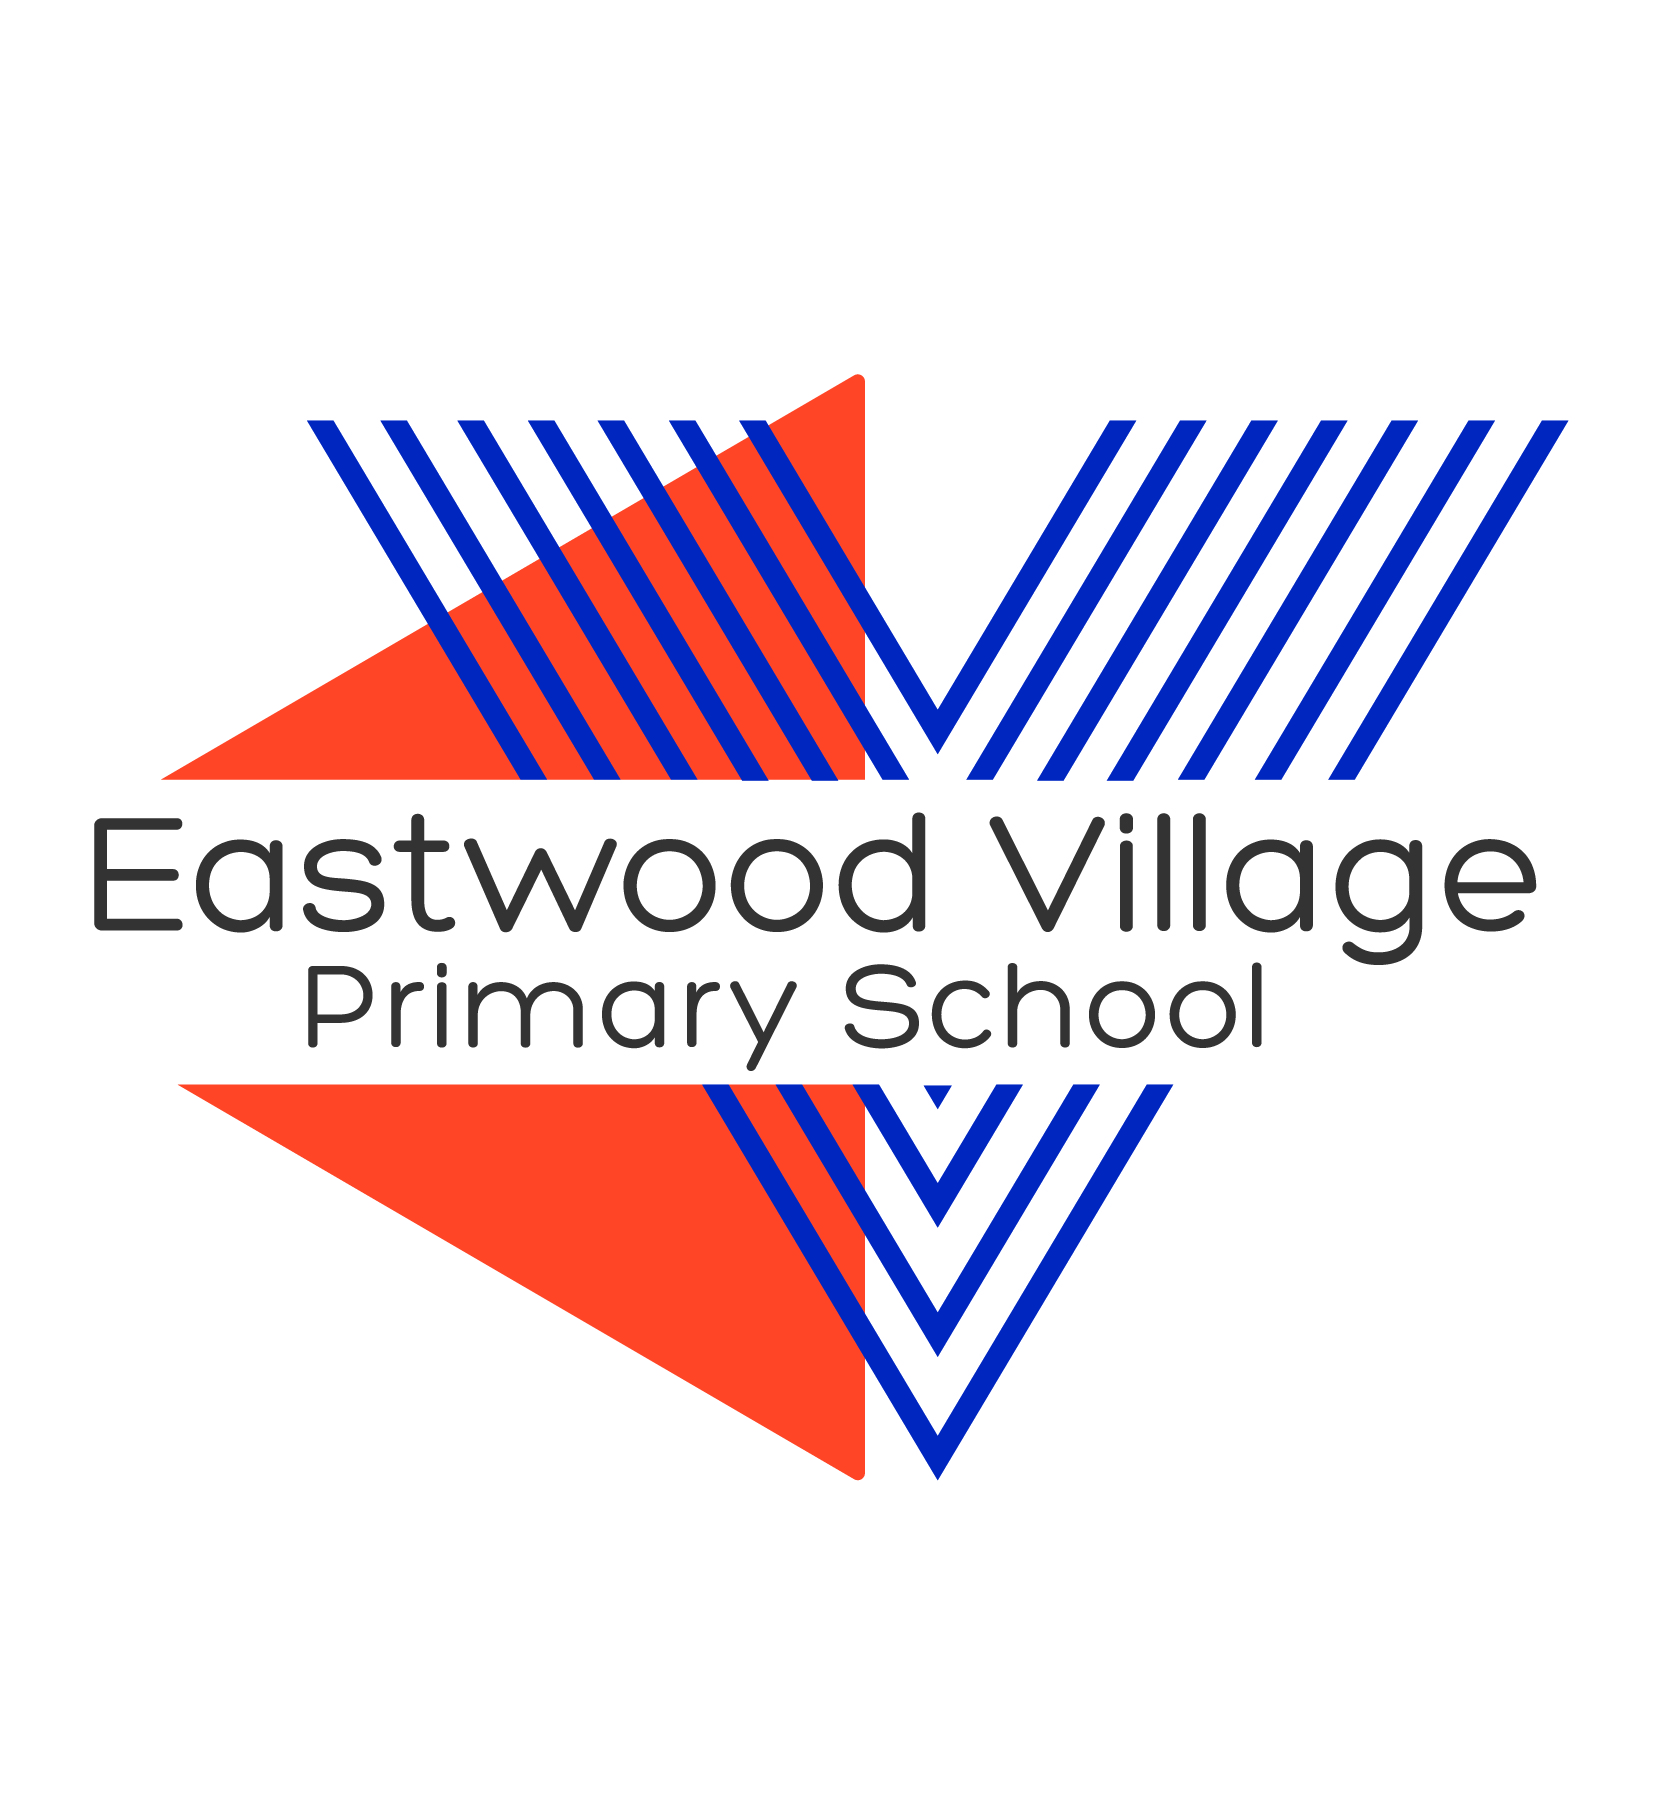 Eastwood Village Primary School